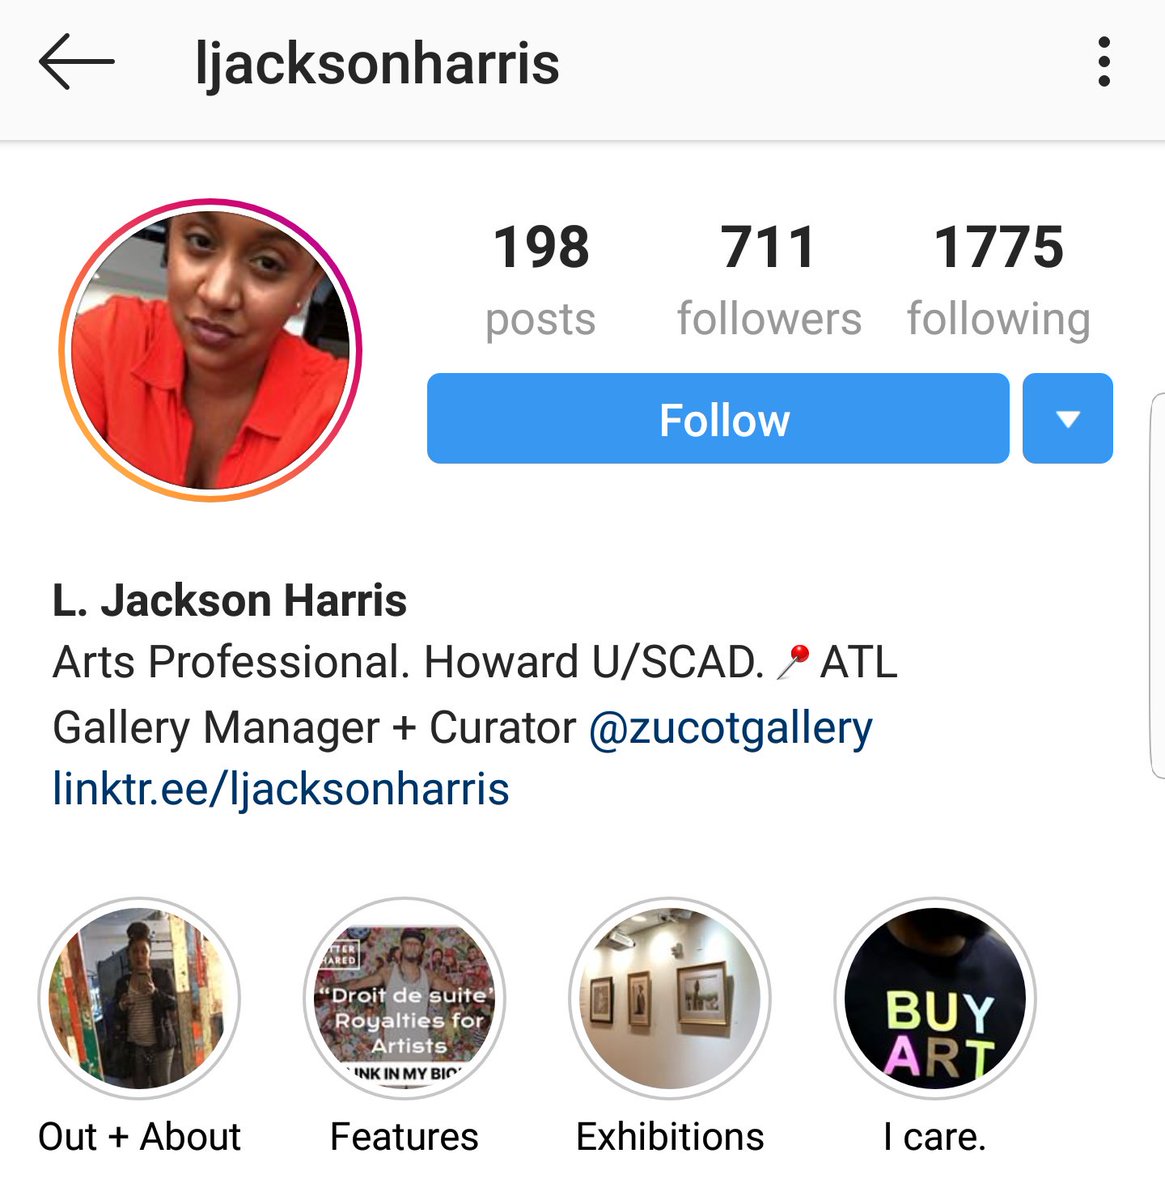 L. Jackson HarrisIG. LjacksonharrisArt ProfessionalGallery Manager Curator at Zucot Gallery